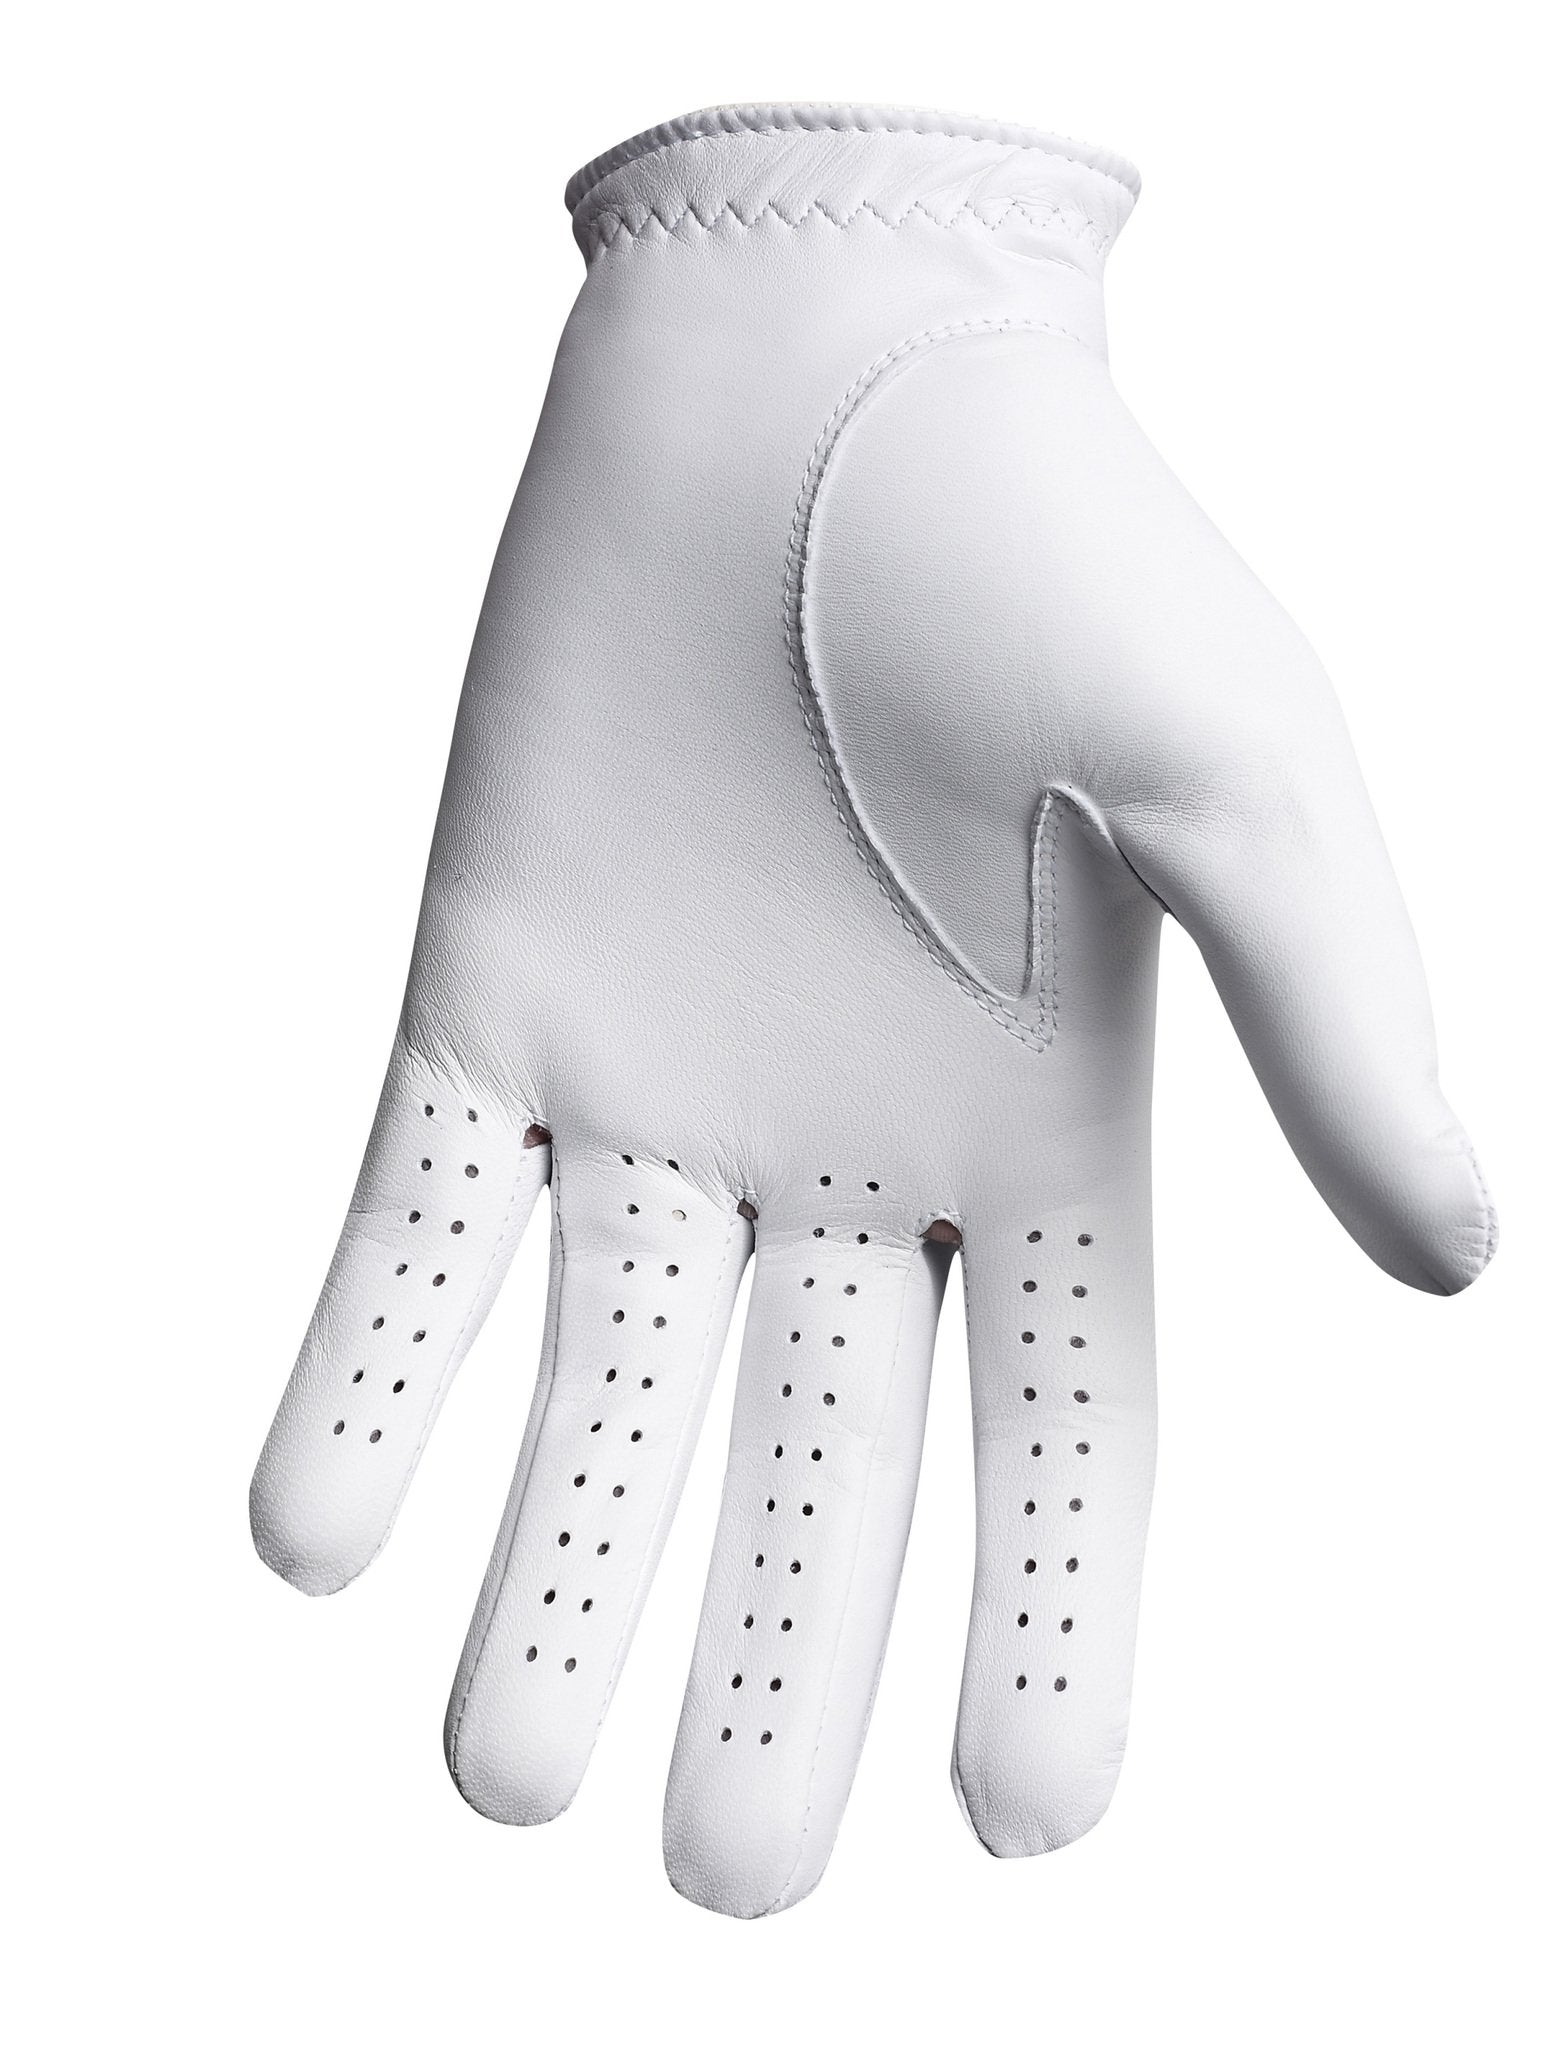 FootJoy Cabrettasof White Golf Glove Left Hand | Evolution Golf  | FootJoy | Evolution Golf 